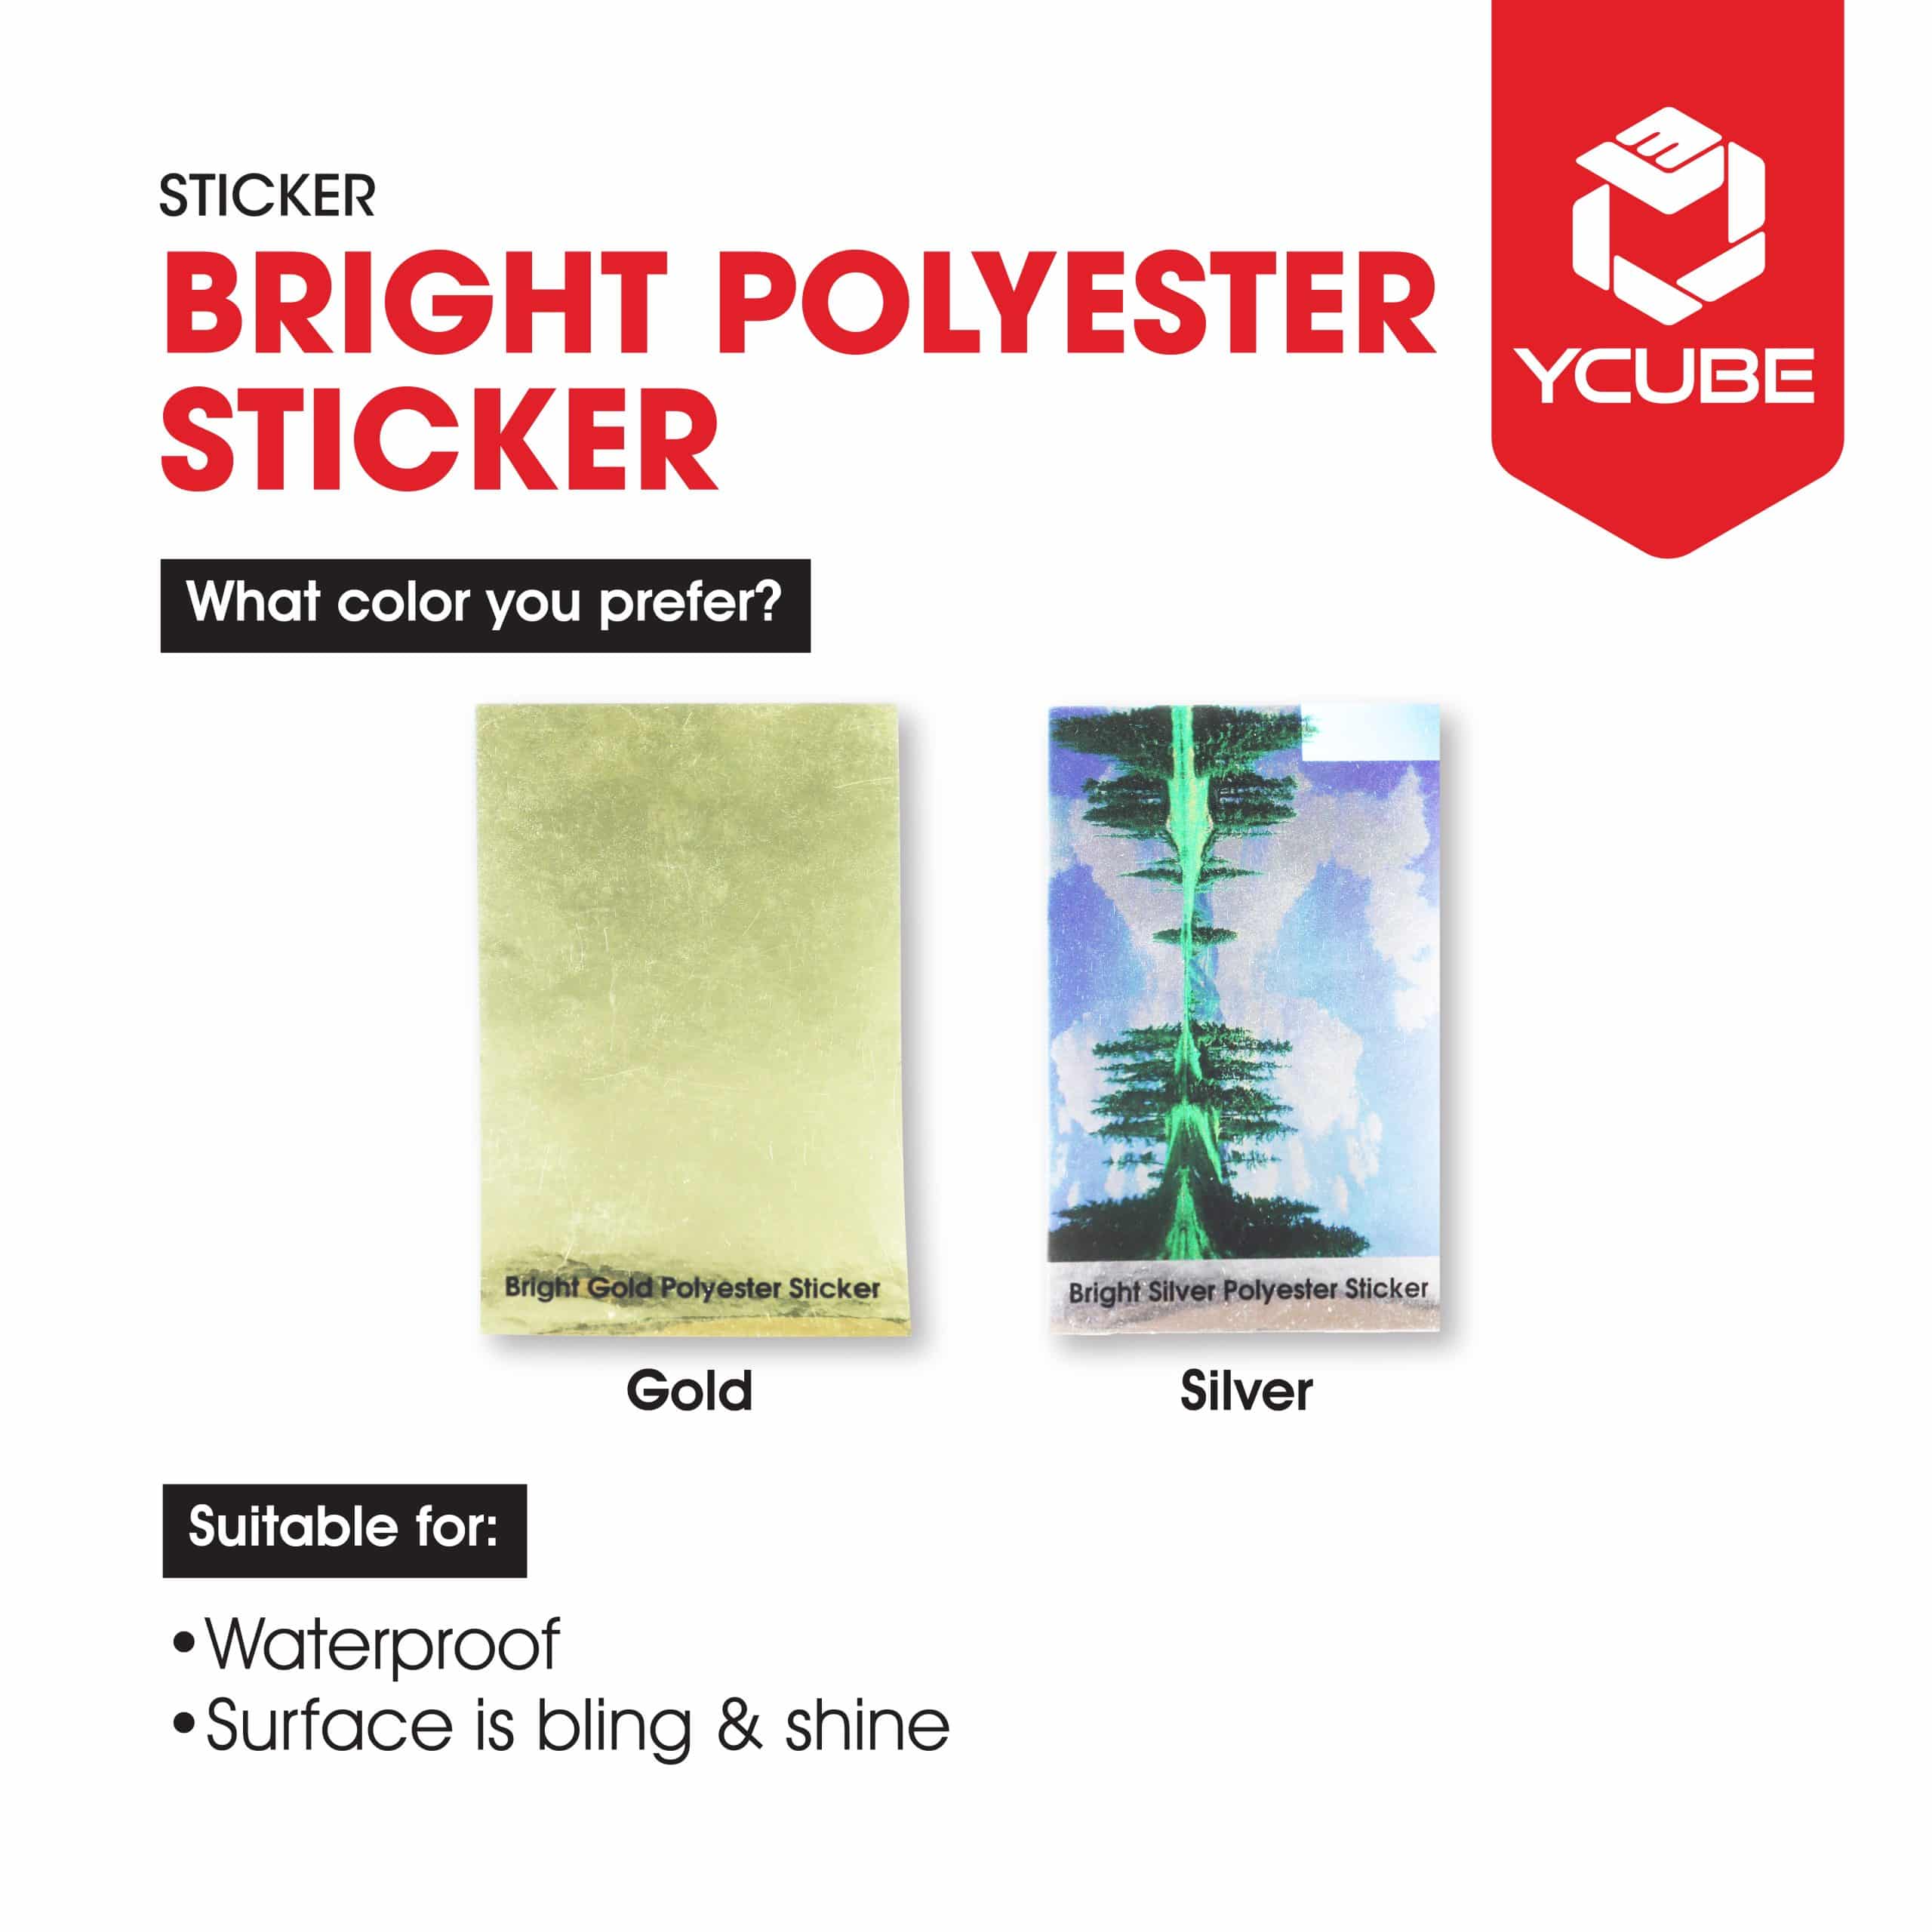 Bright Silver Polyester & Sticker